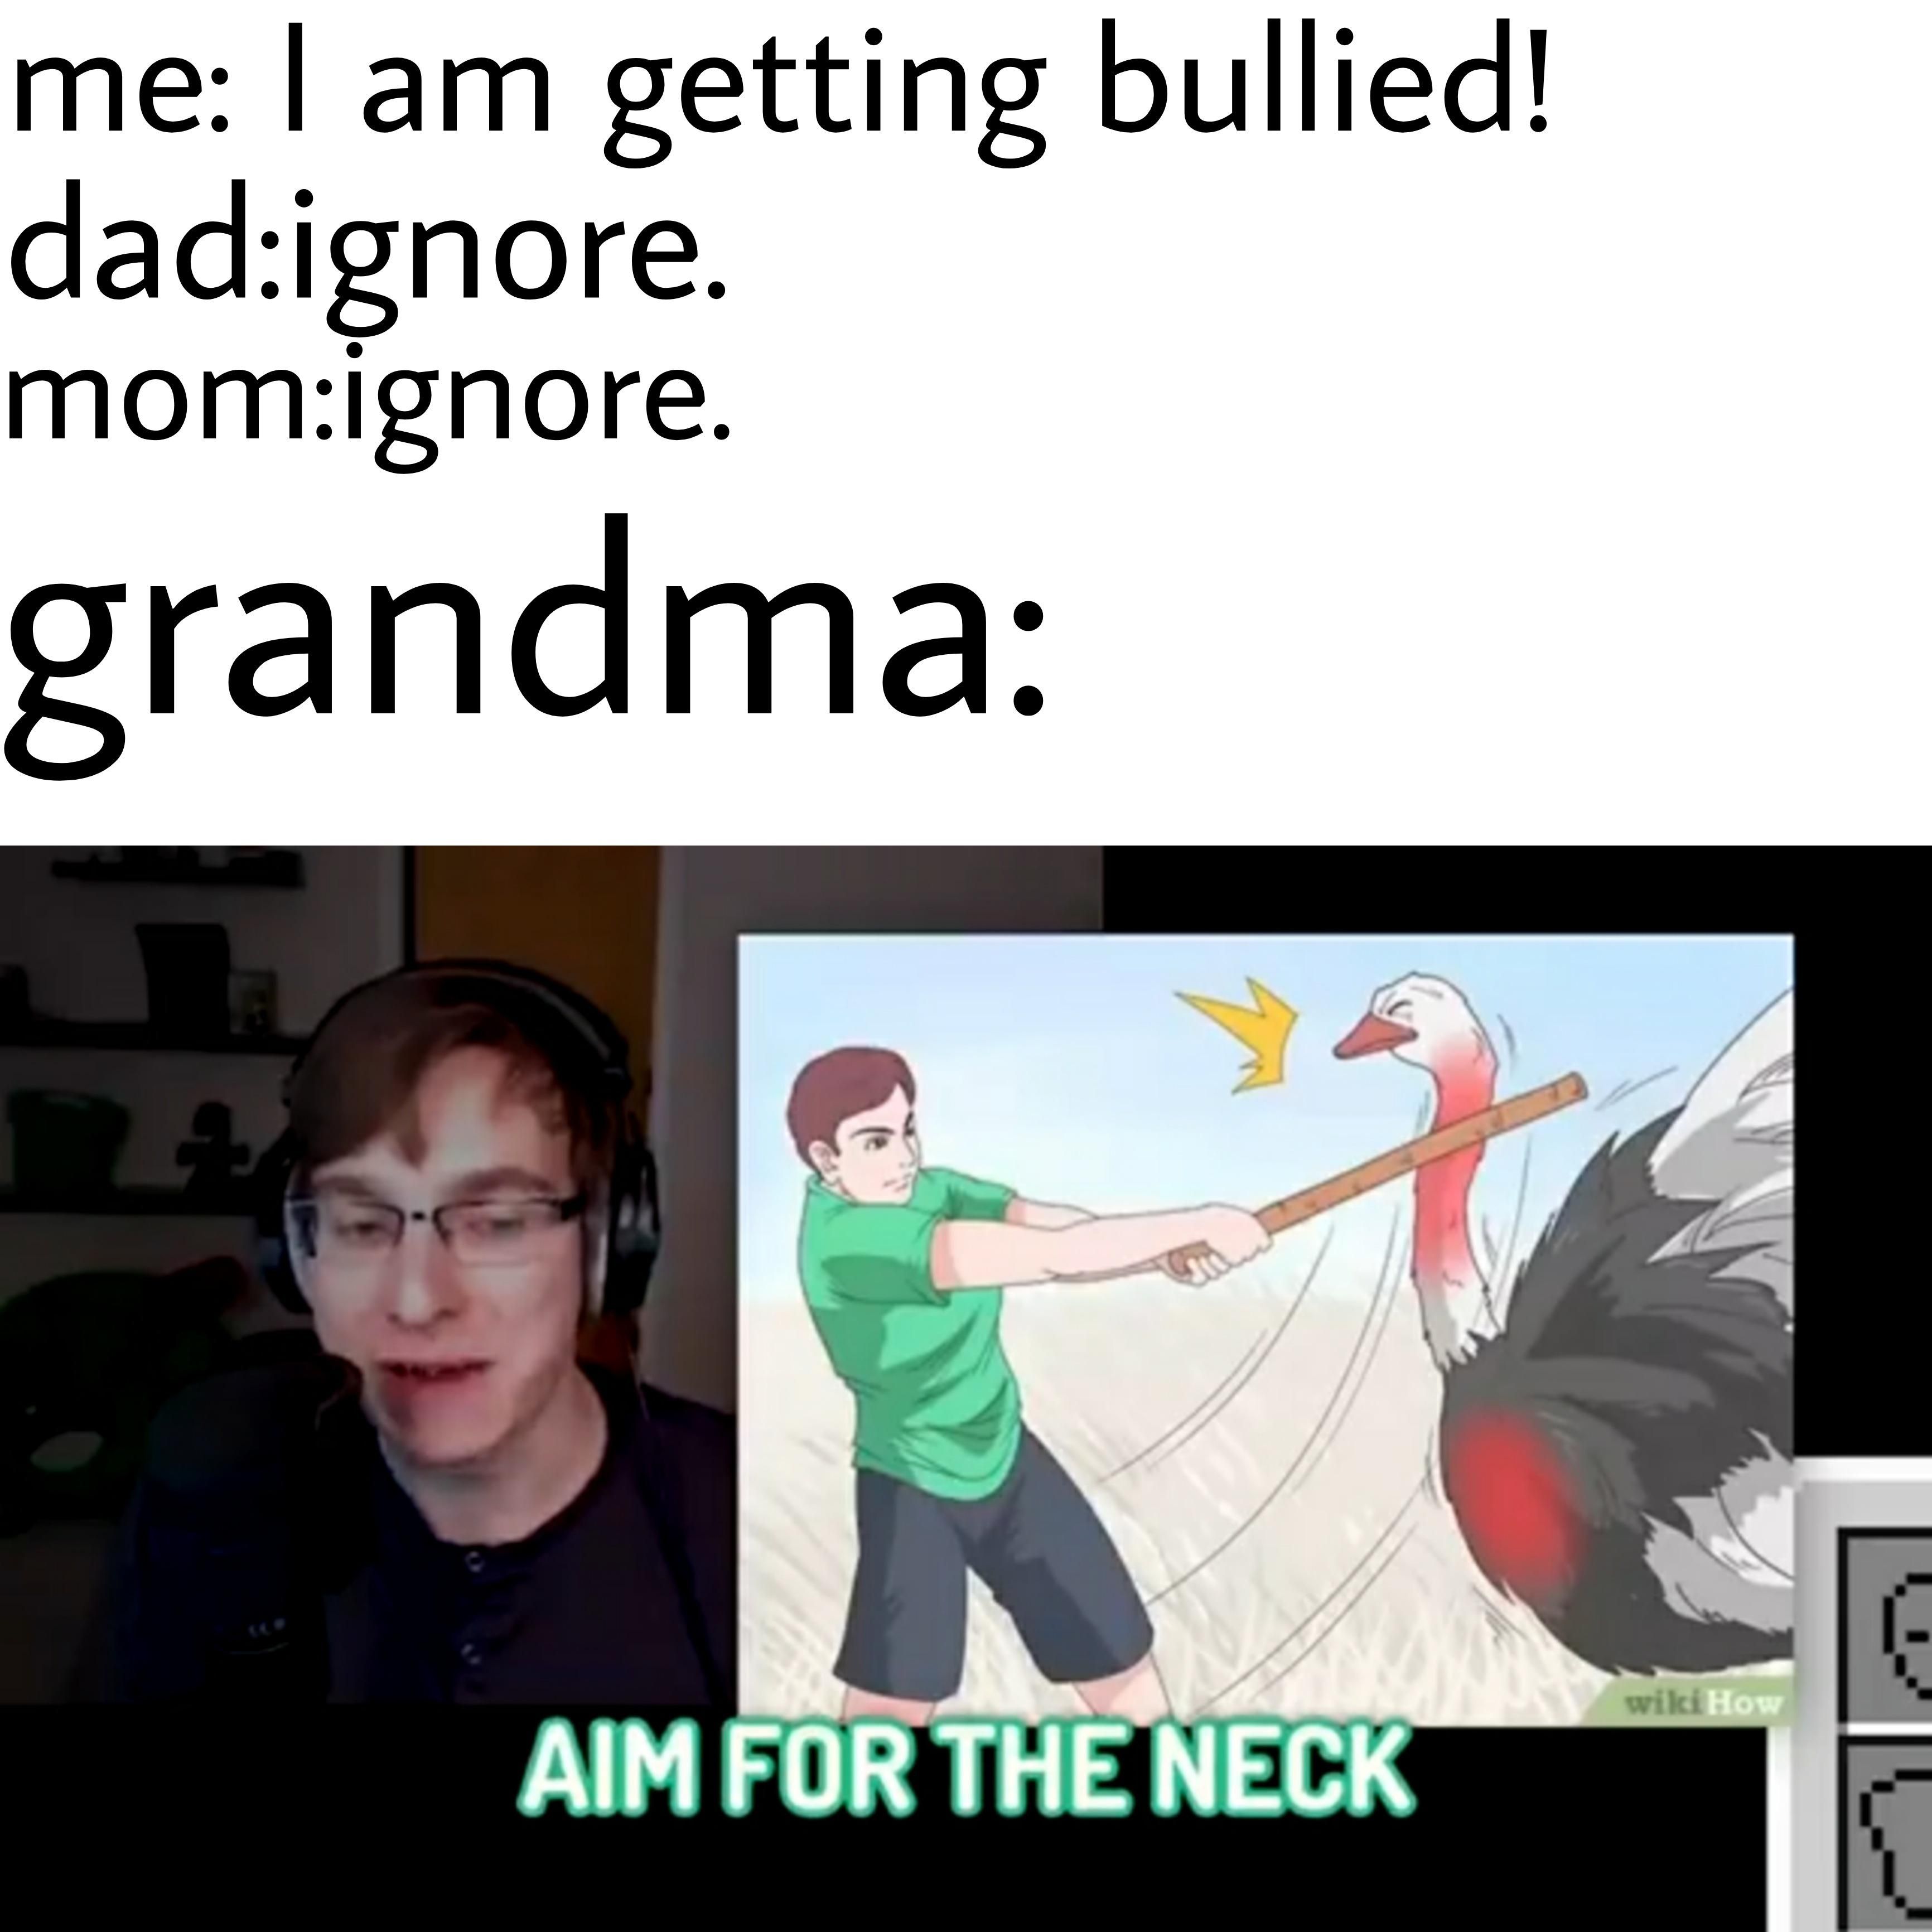 Grandma is the true saviour